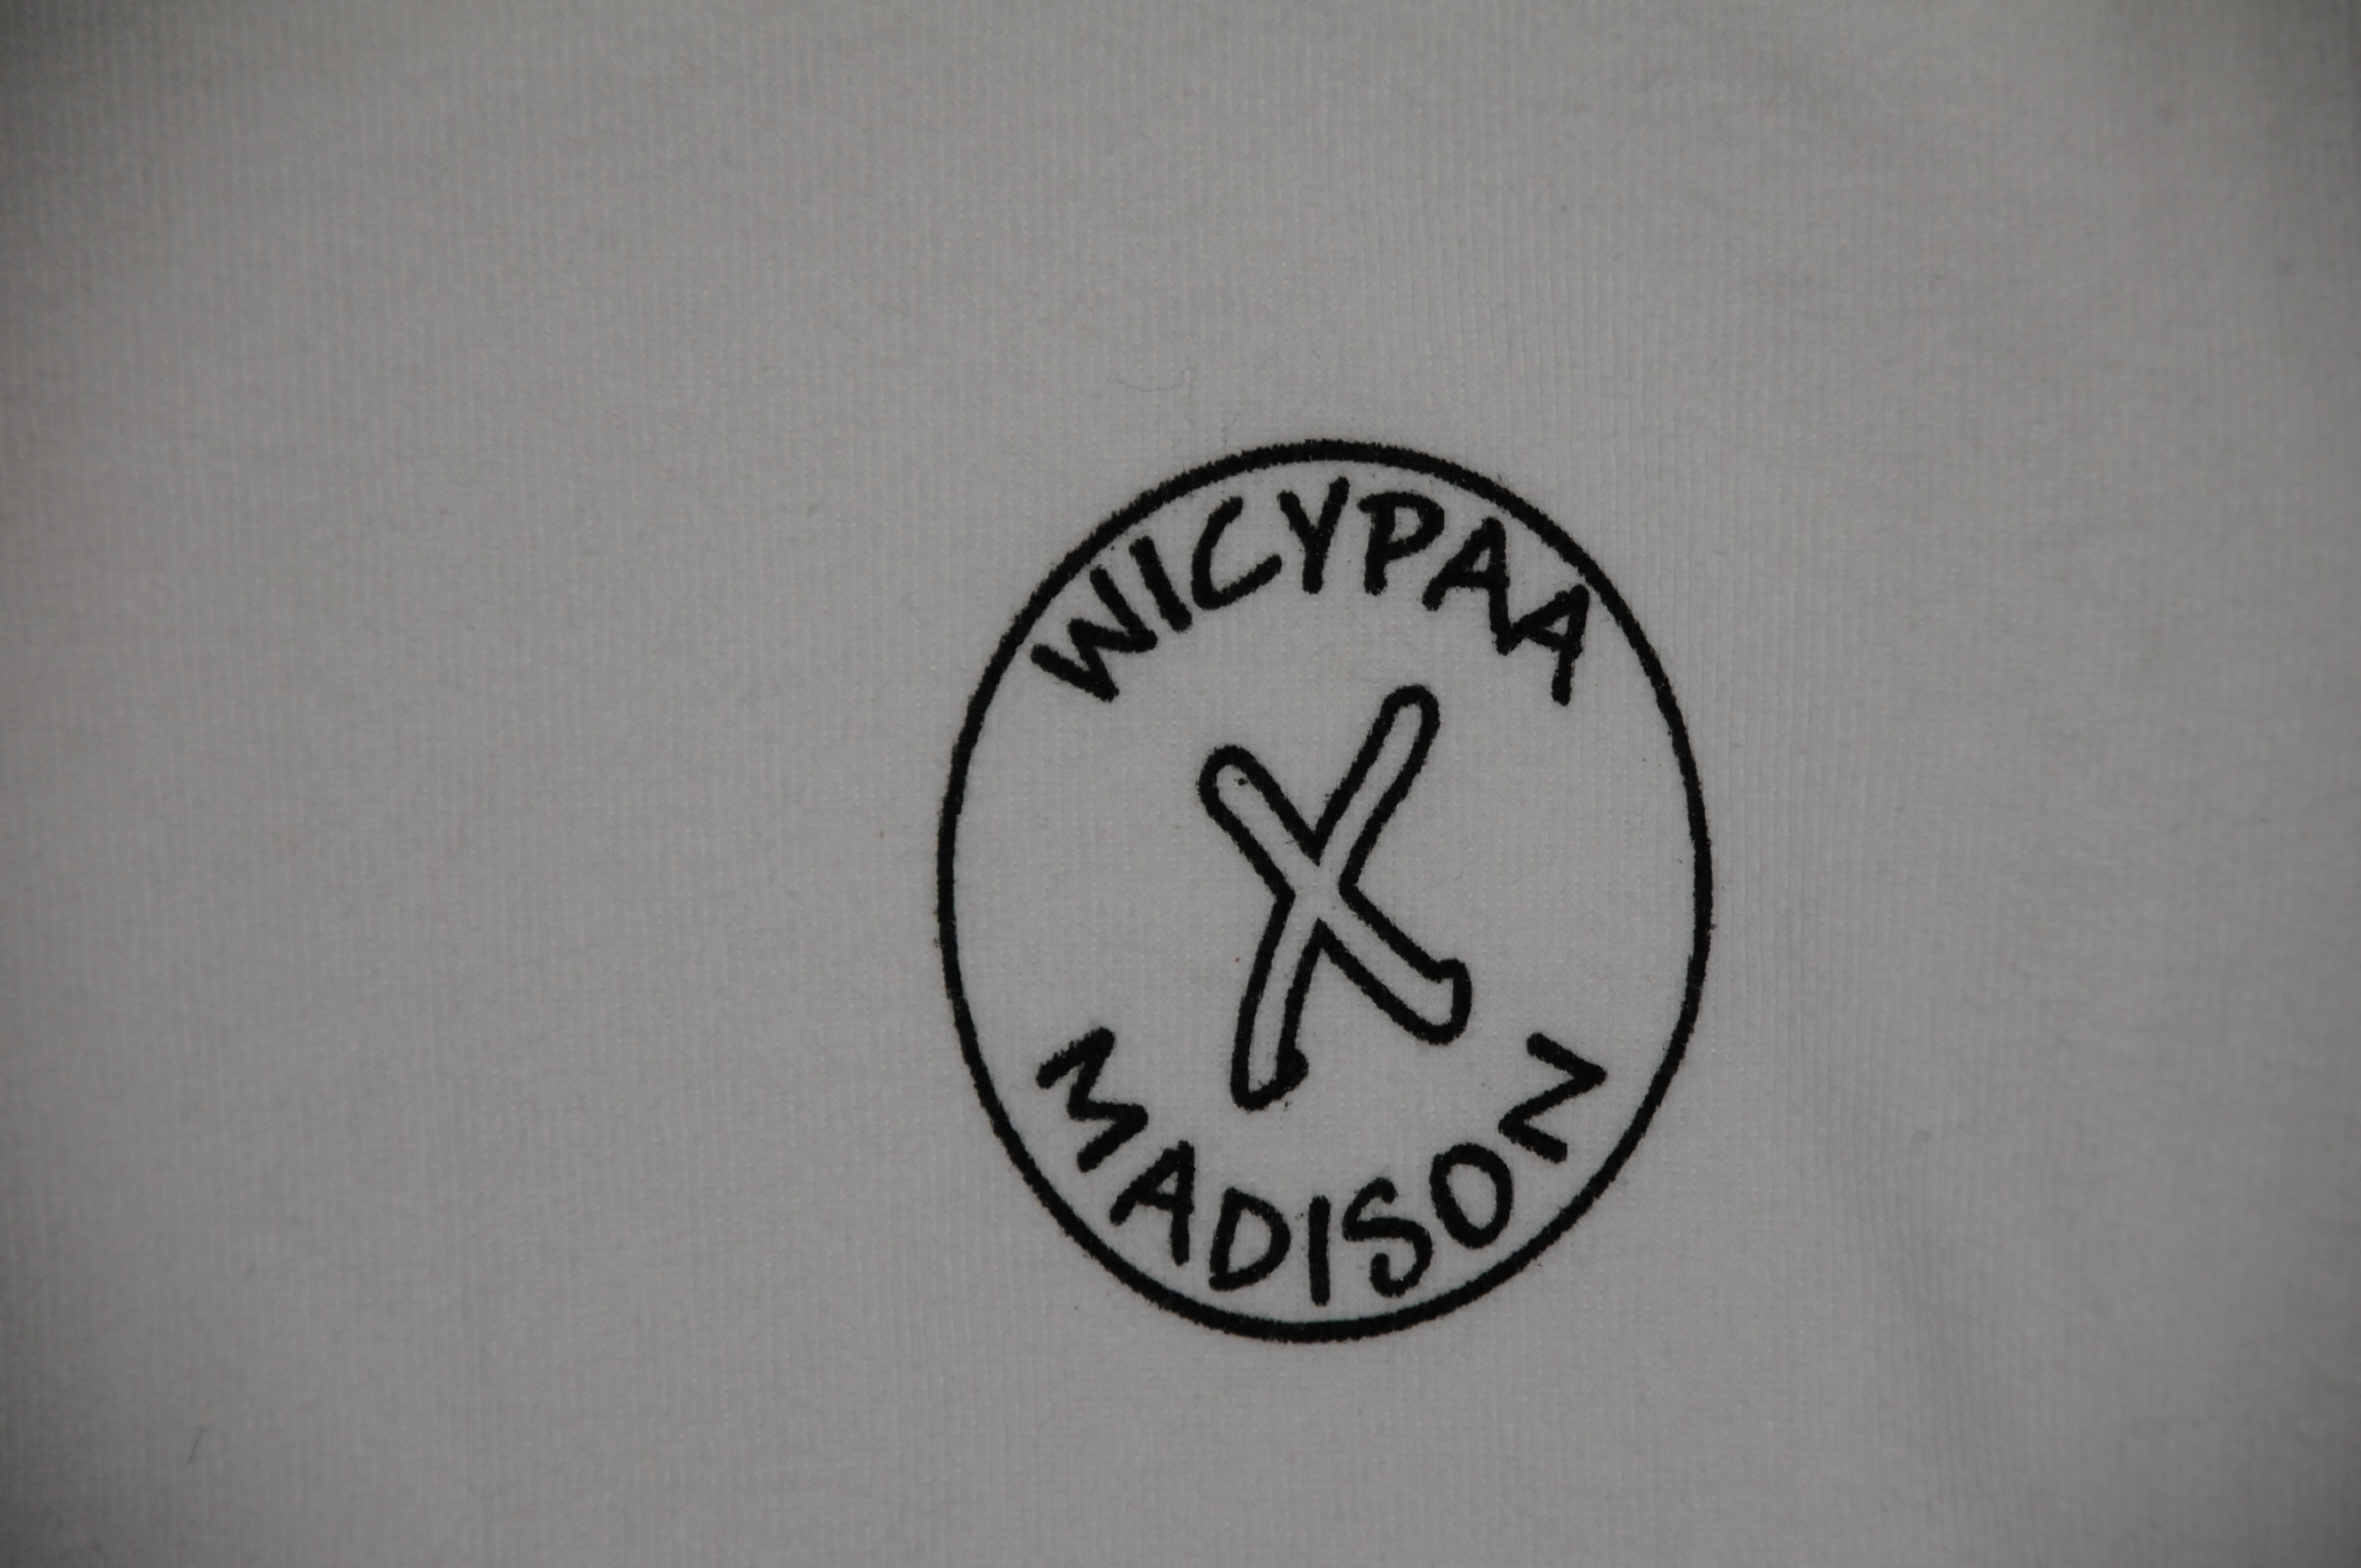 WICYPAA X Slogan